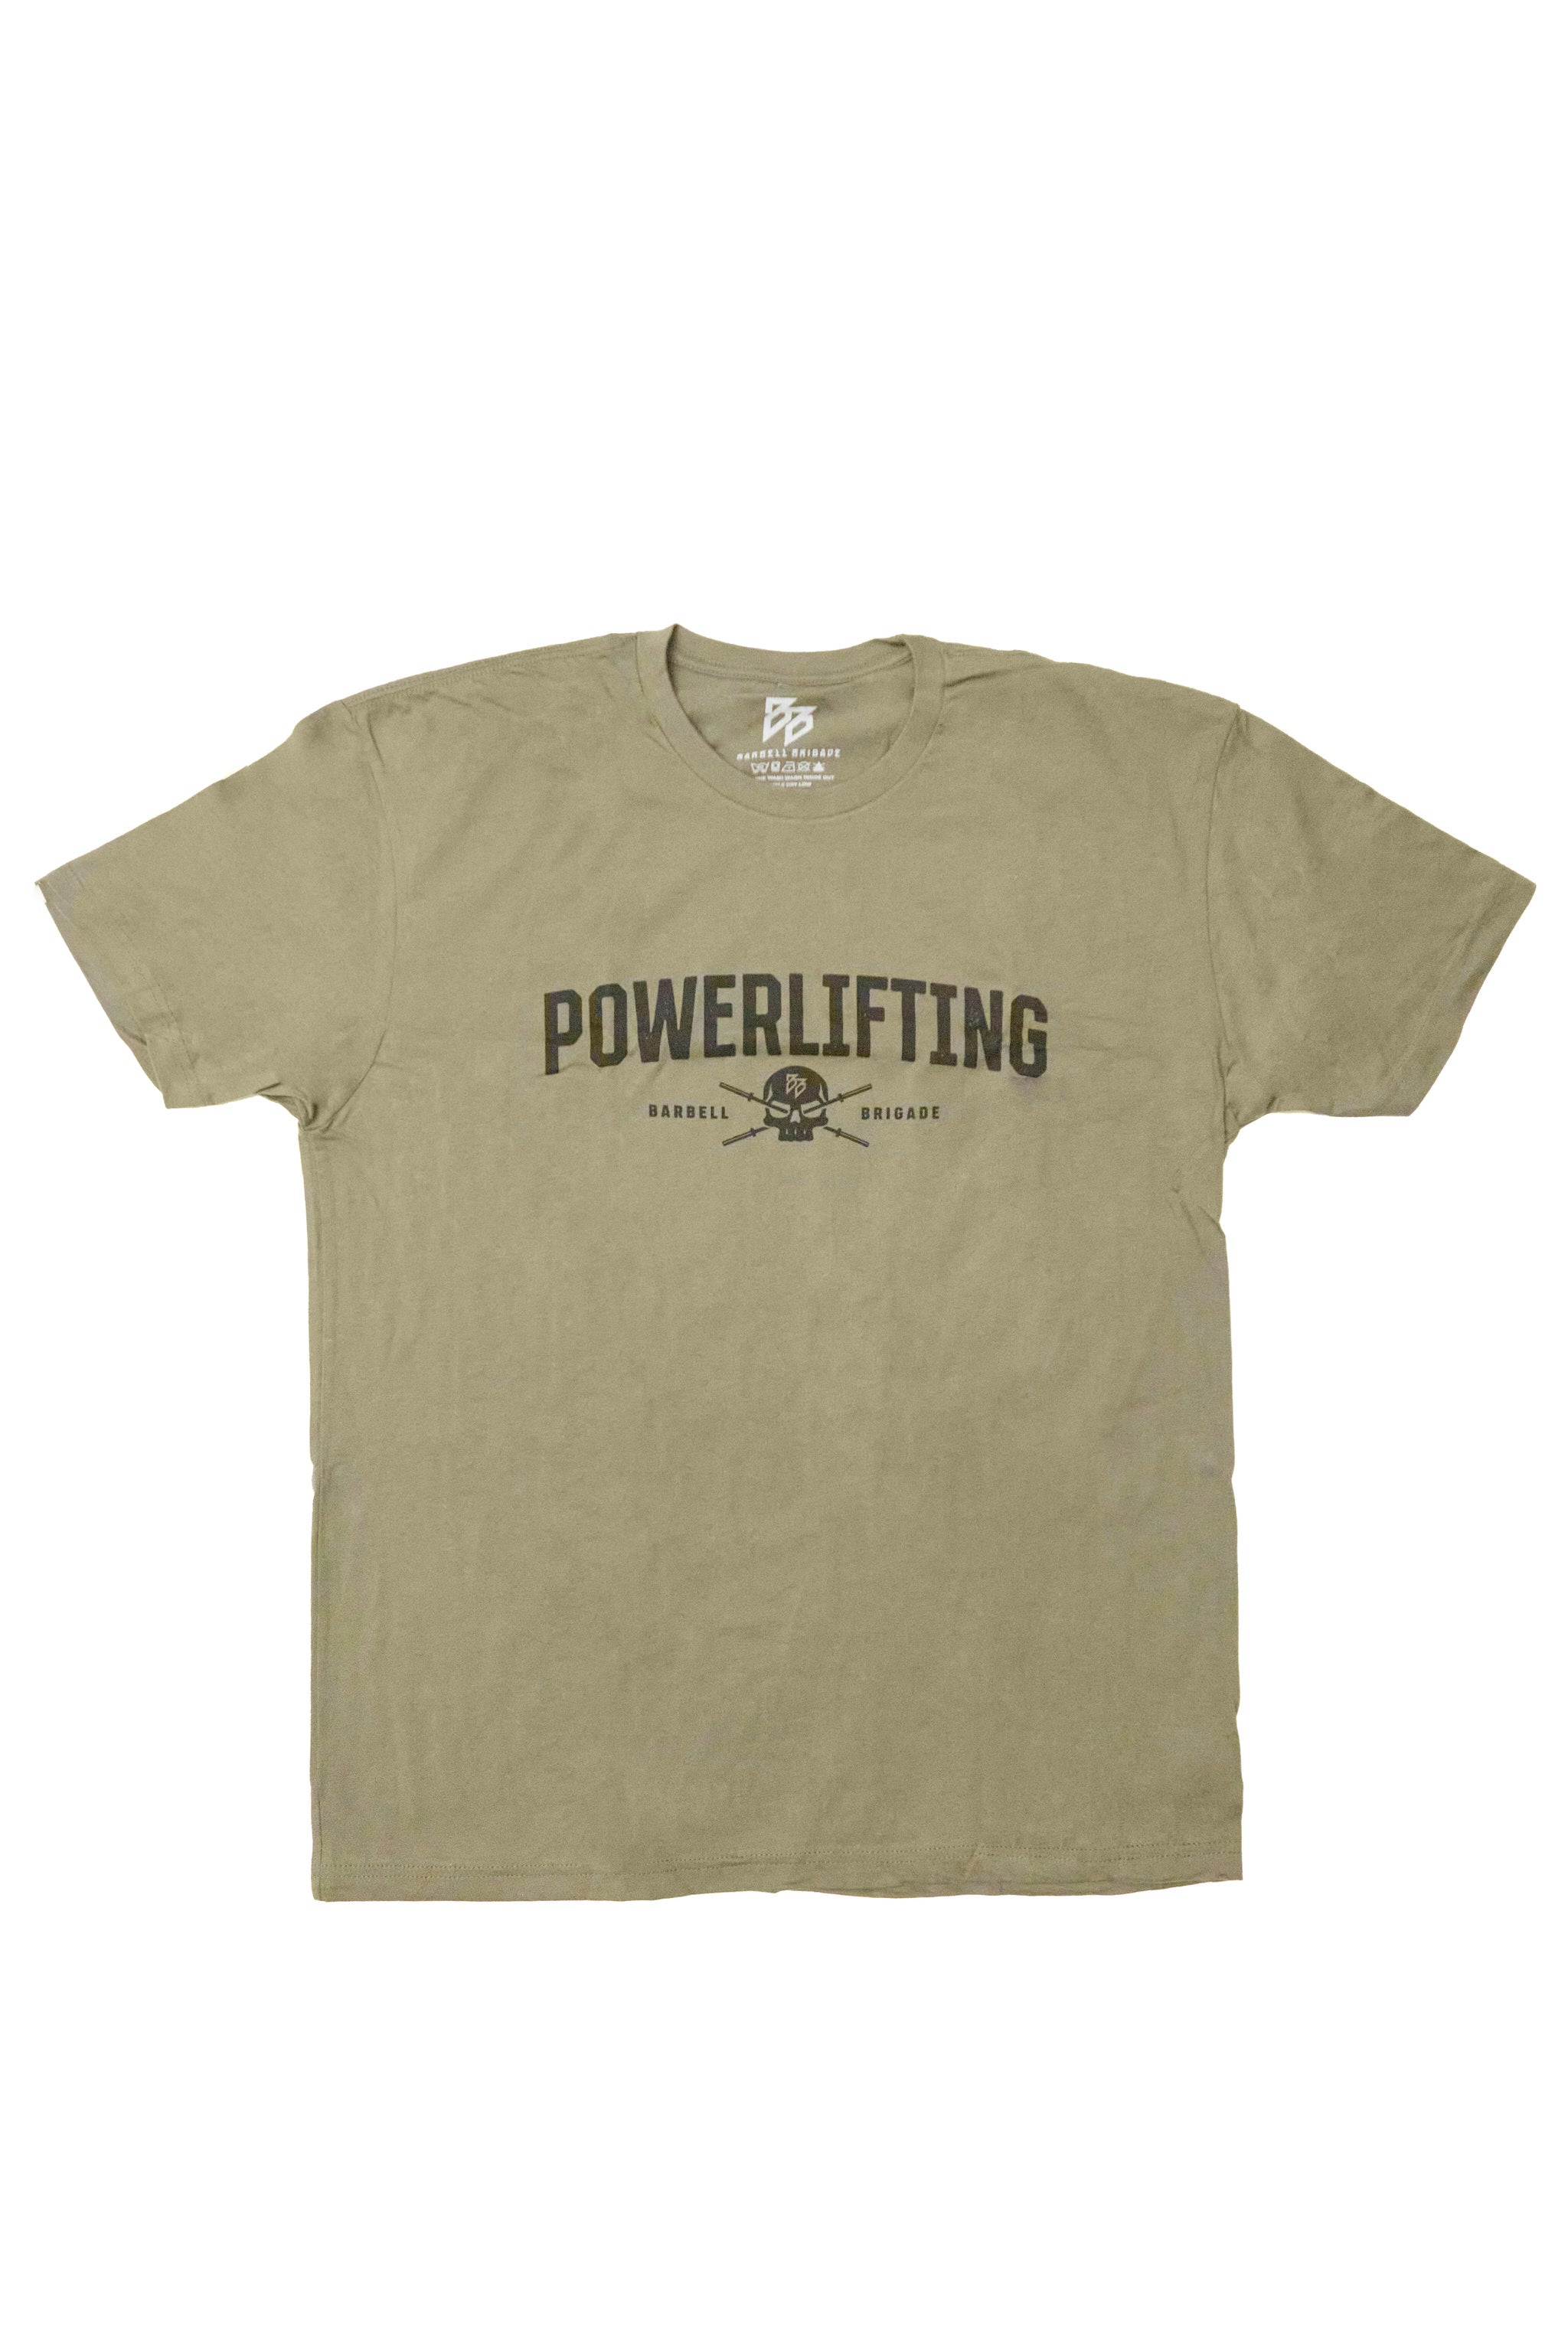 Powerlifting - Tee (Military Green)